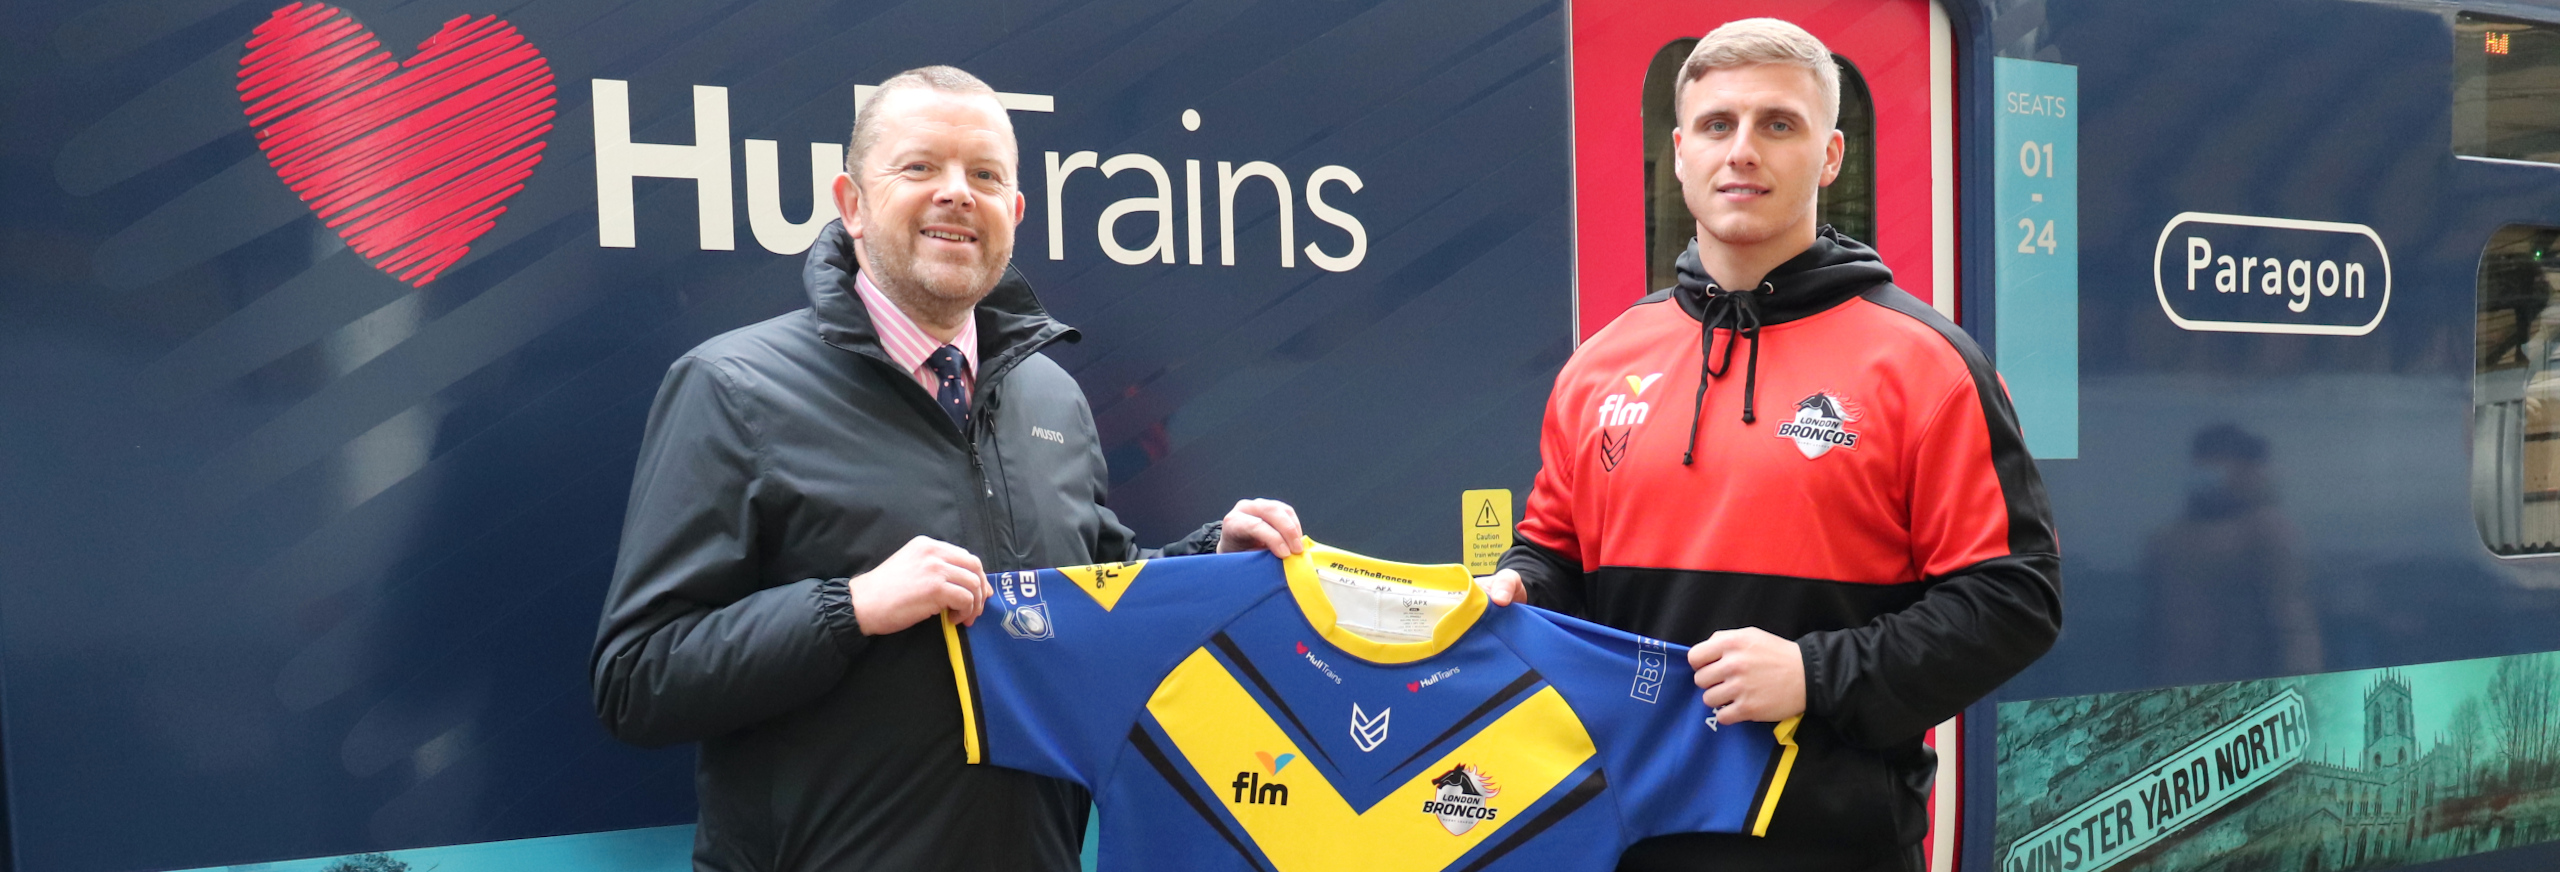 Hull Trains and London Broncos partnership